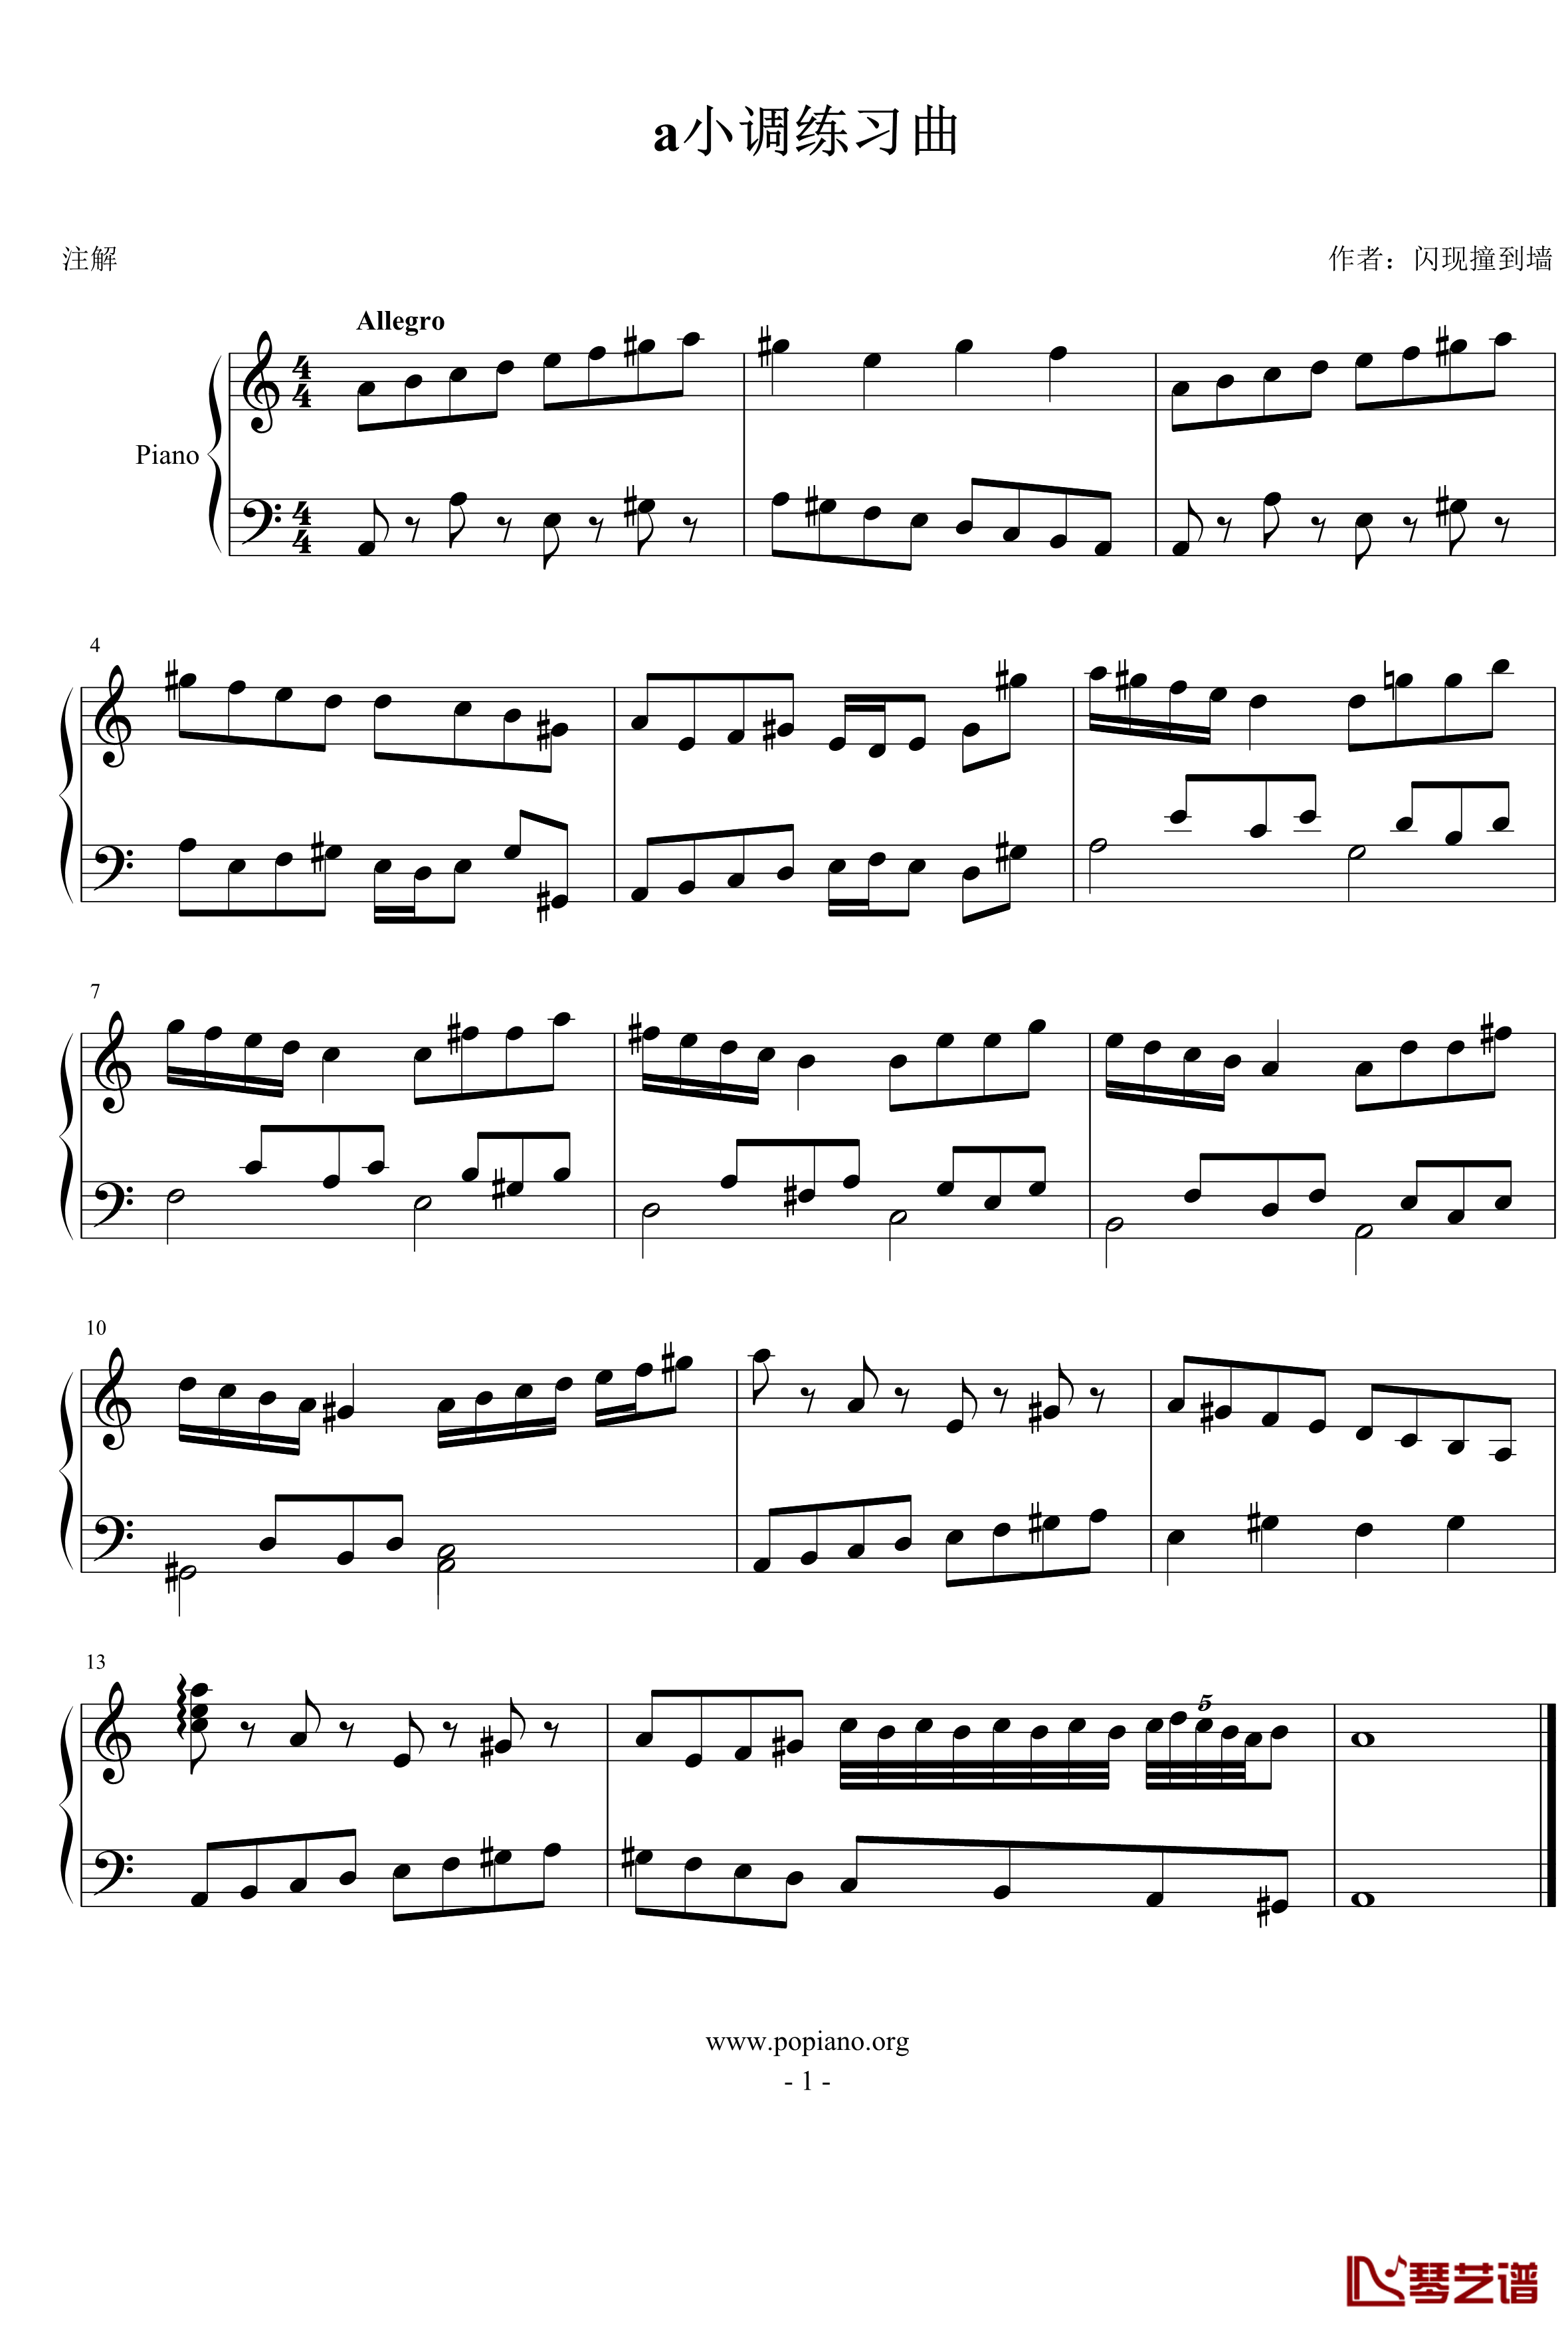 a小调练习曲钢琴谱-zhangjie0123471